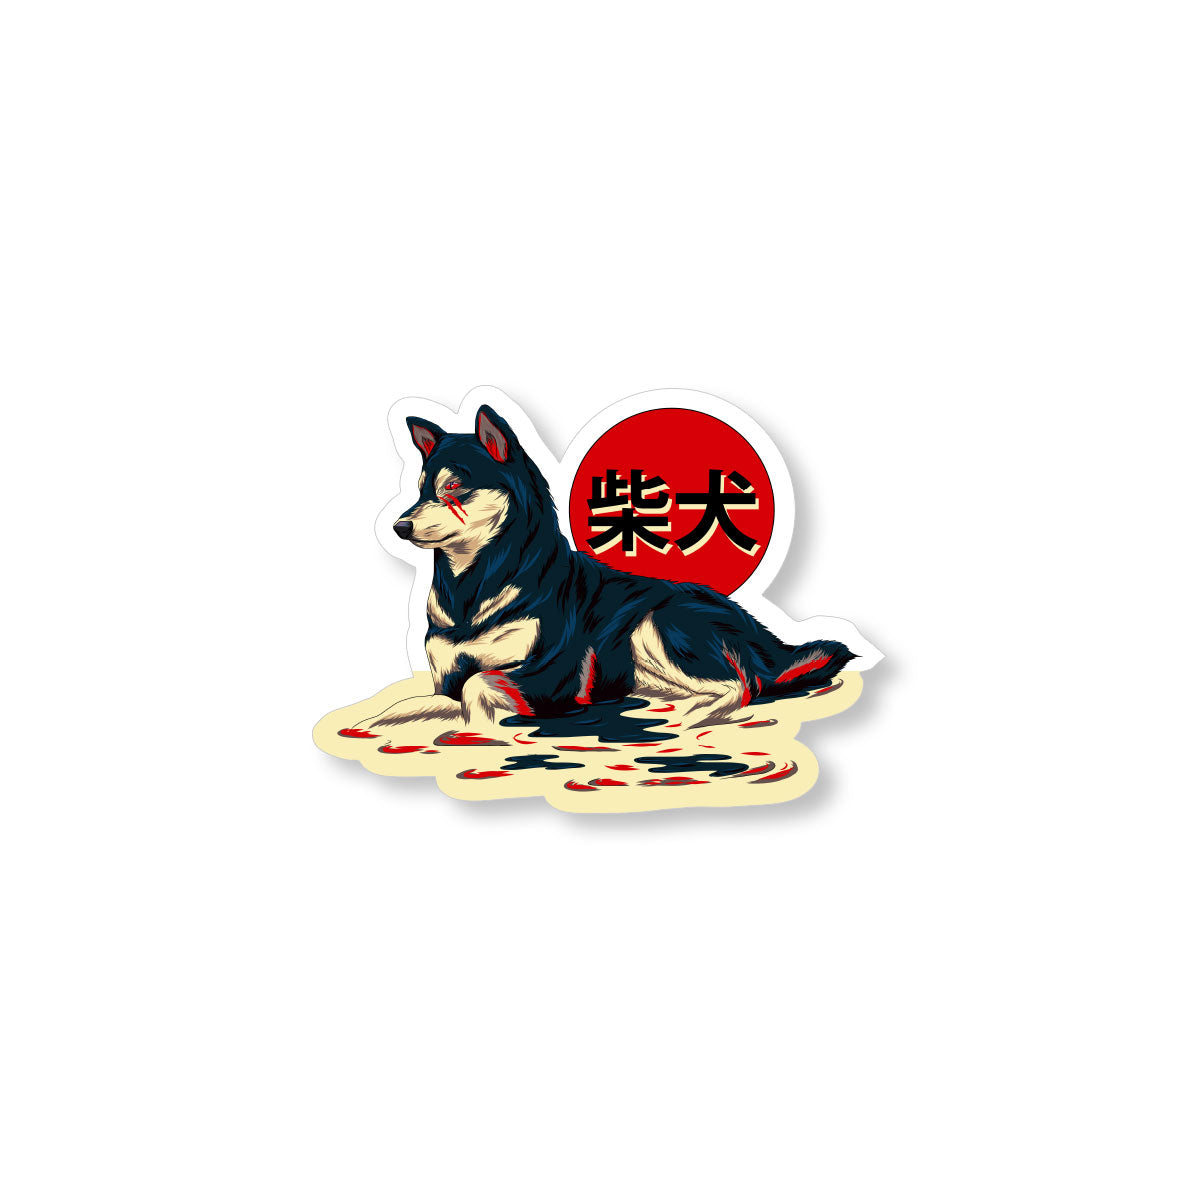 Shiba Inu Sticker